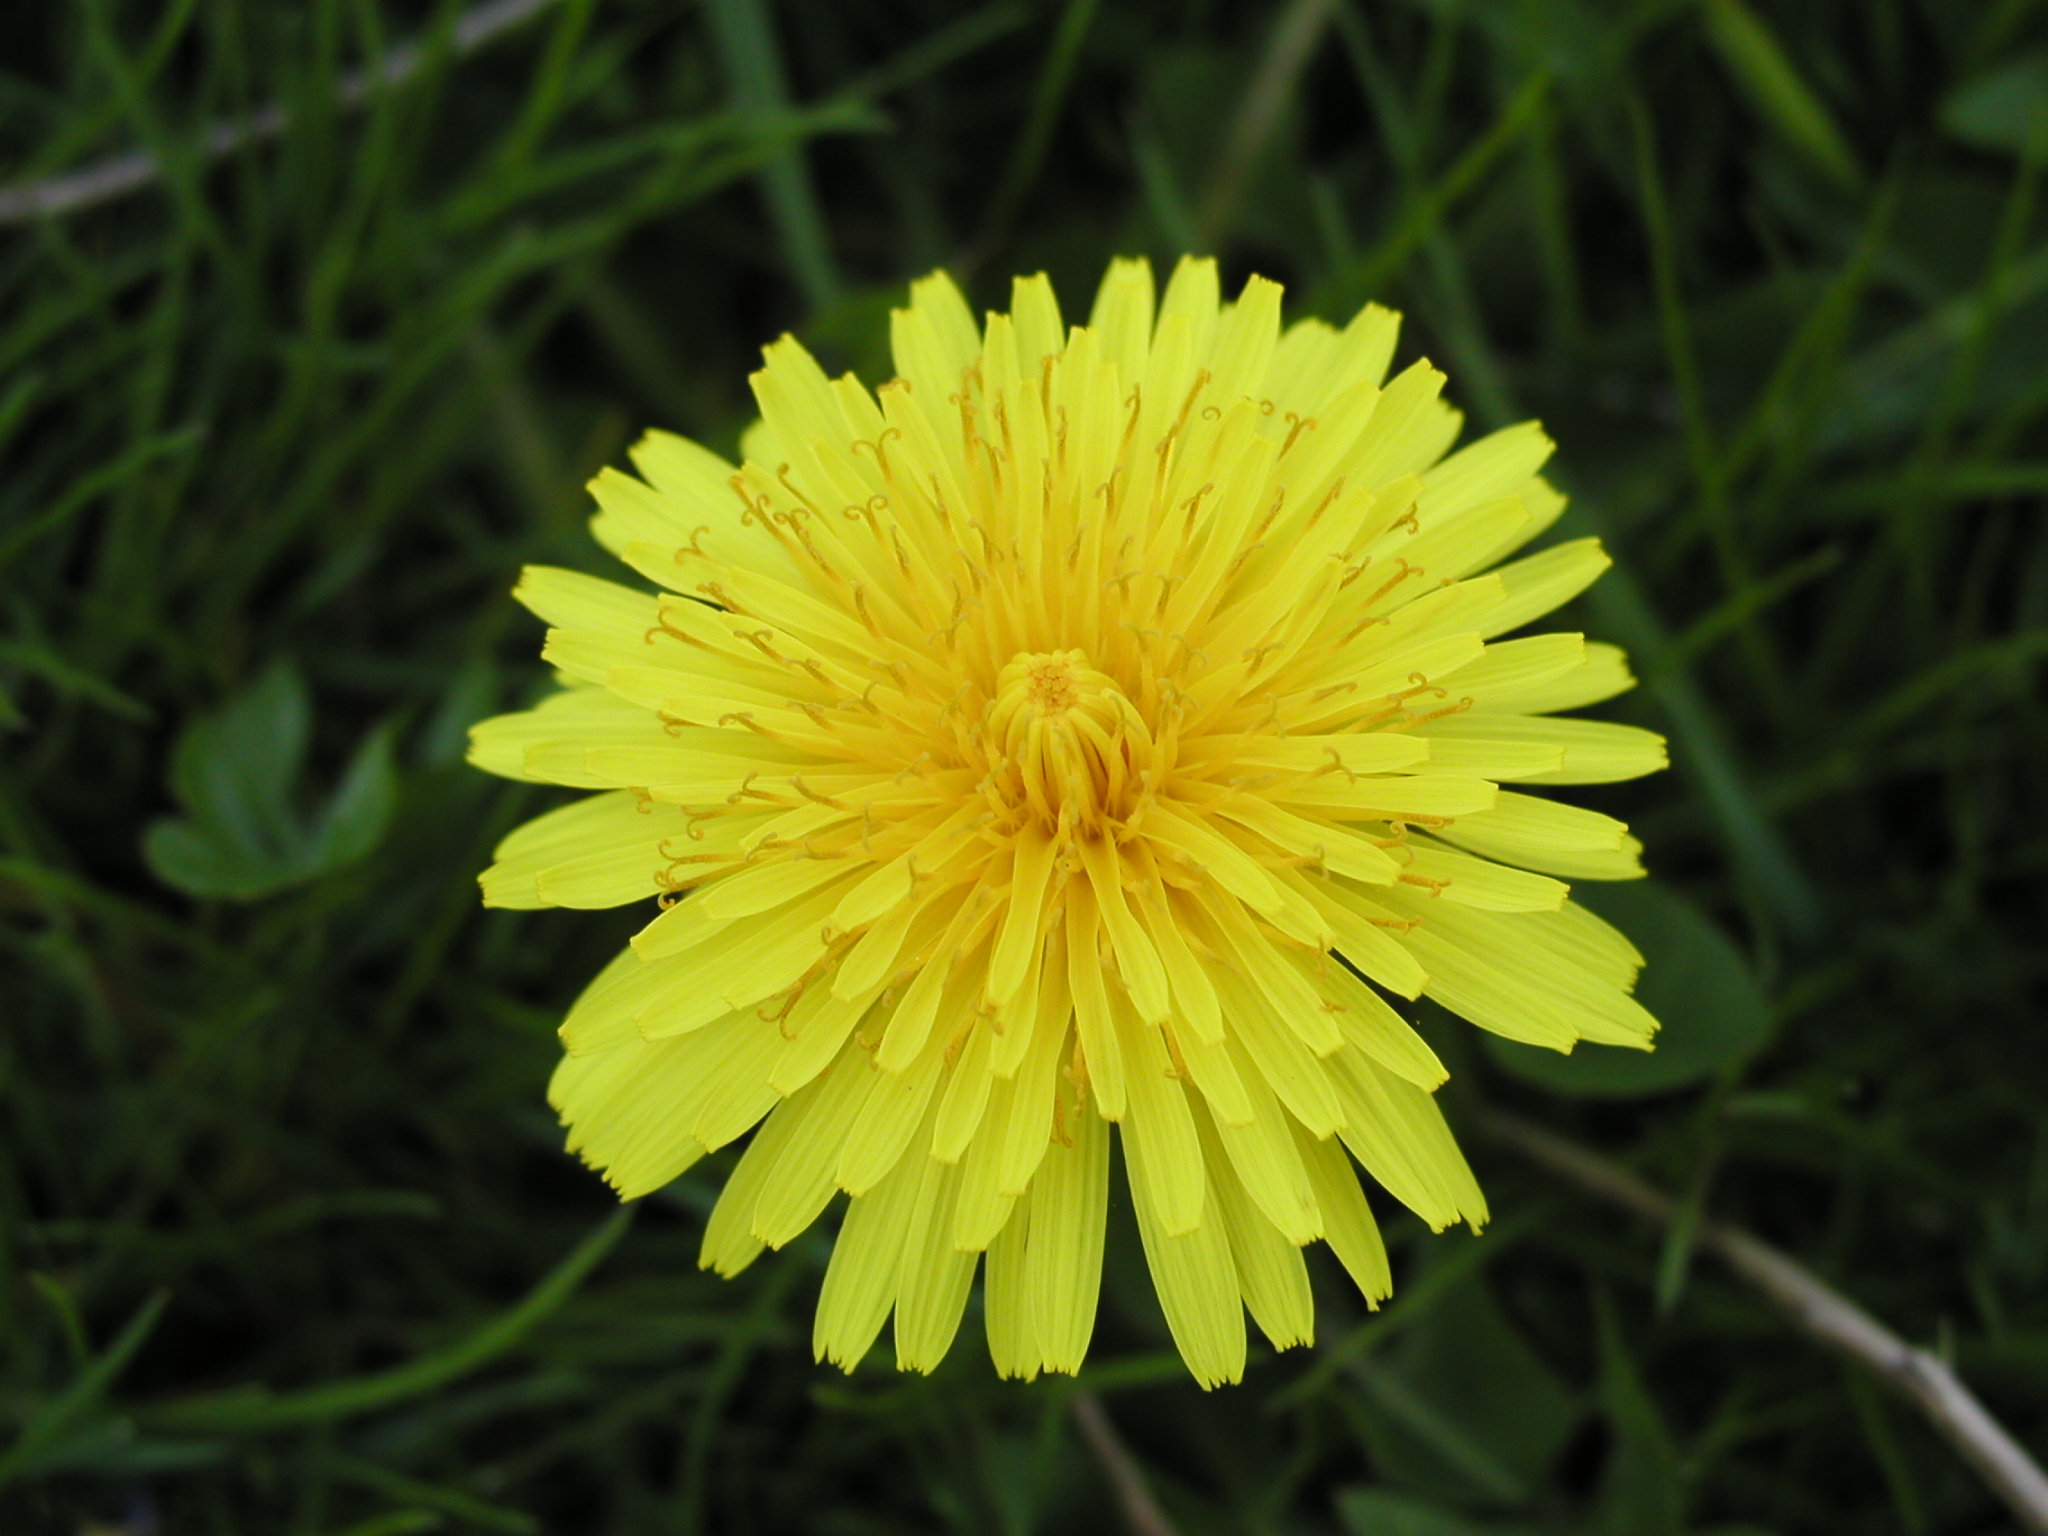 File:Dandelion close-up.jpg - Wikimedia Commons